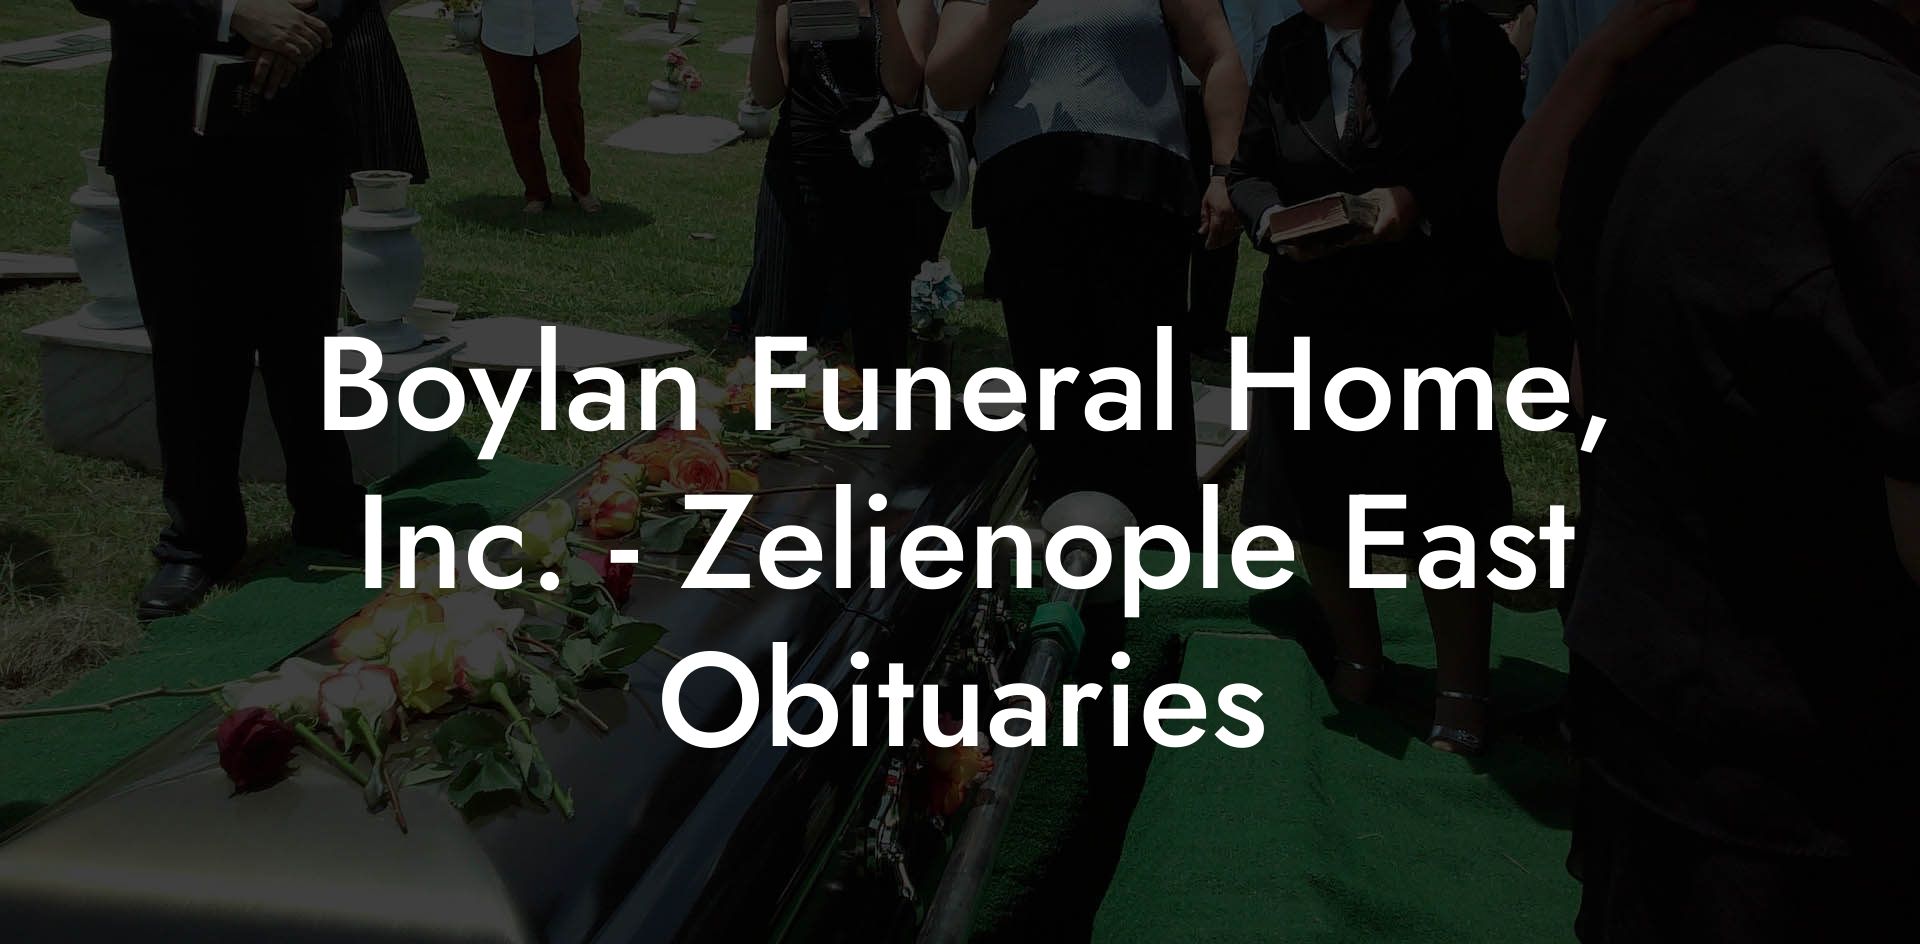 Boylan Funeral Home, Inc. - Zelienople East Obituaries